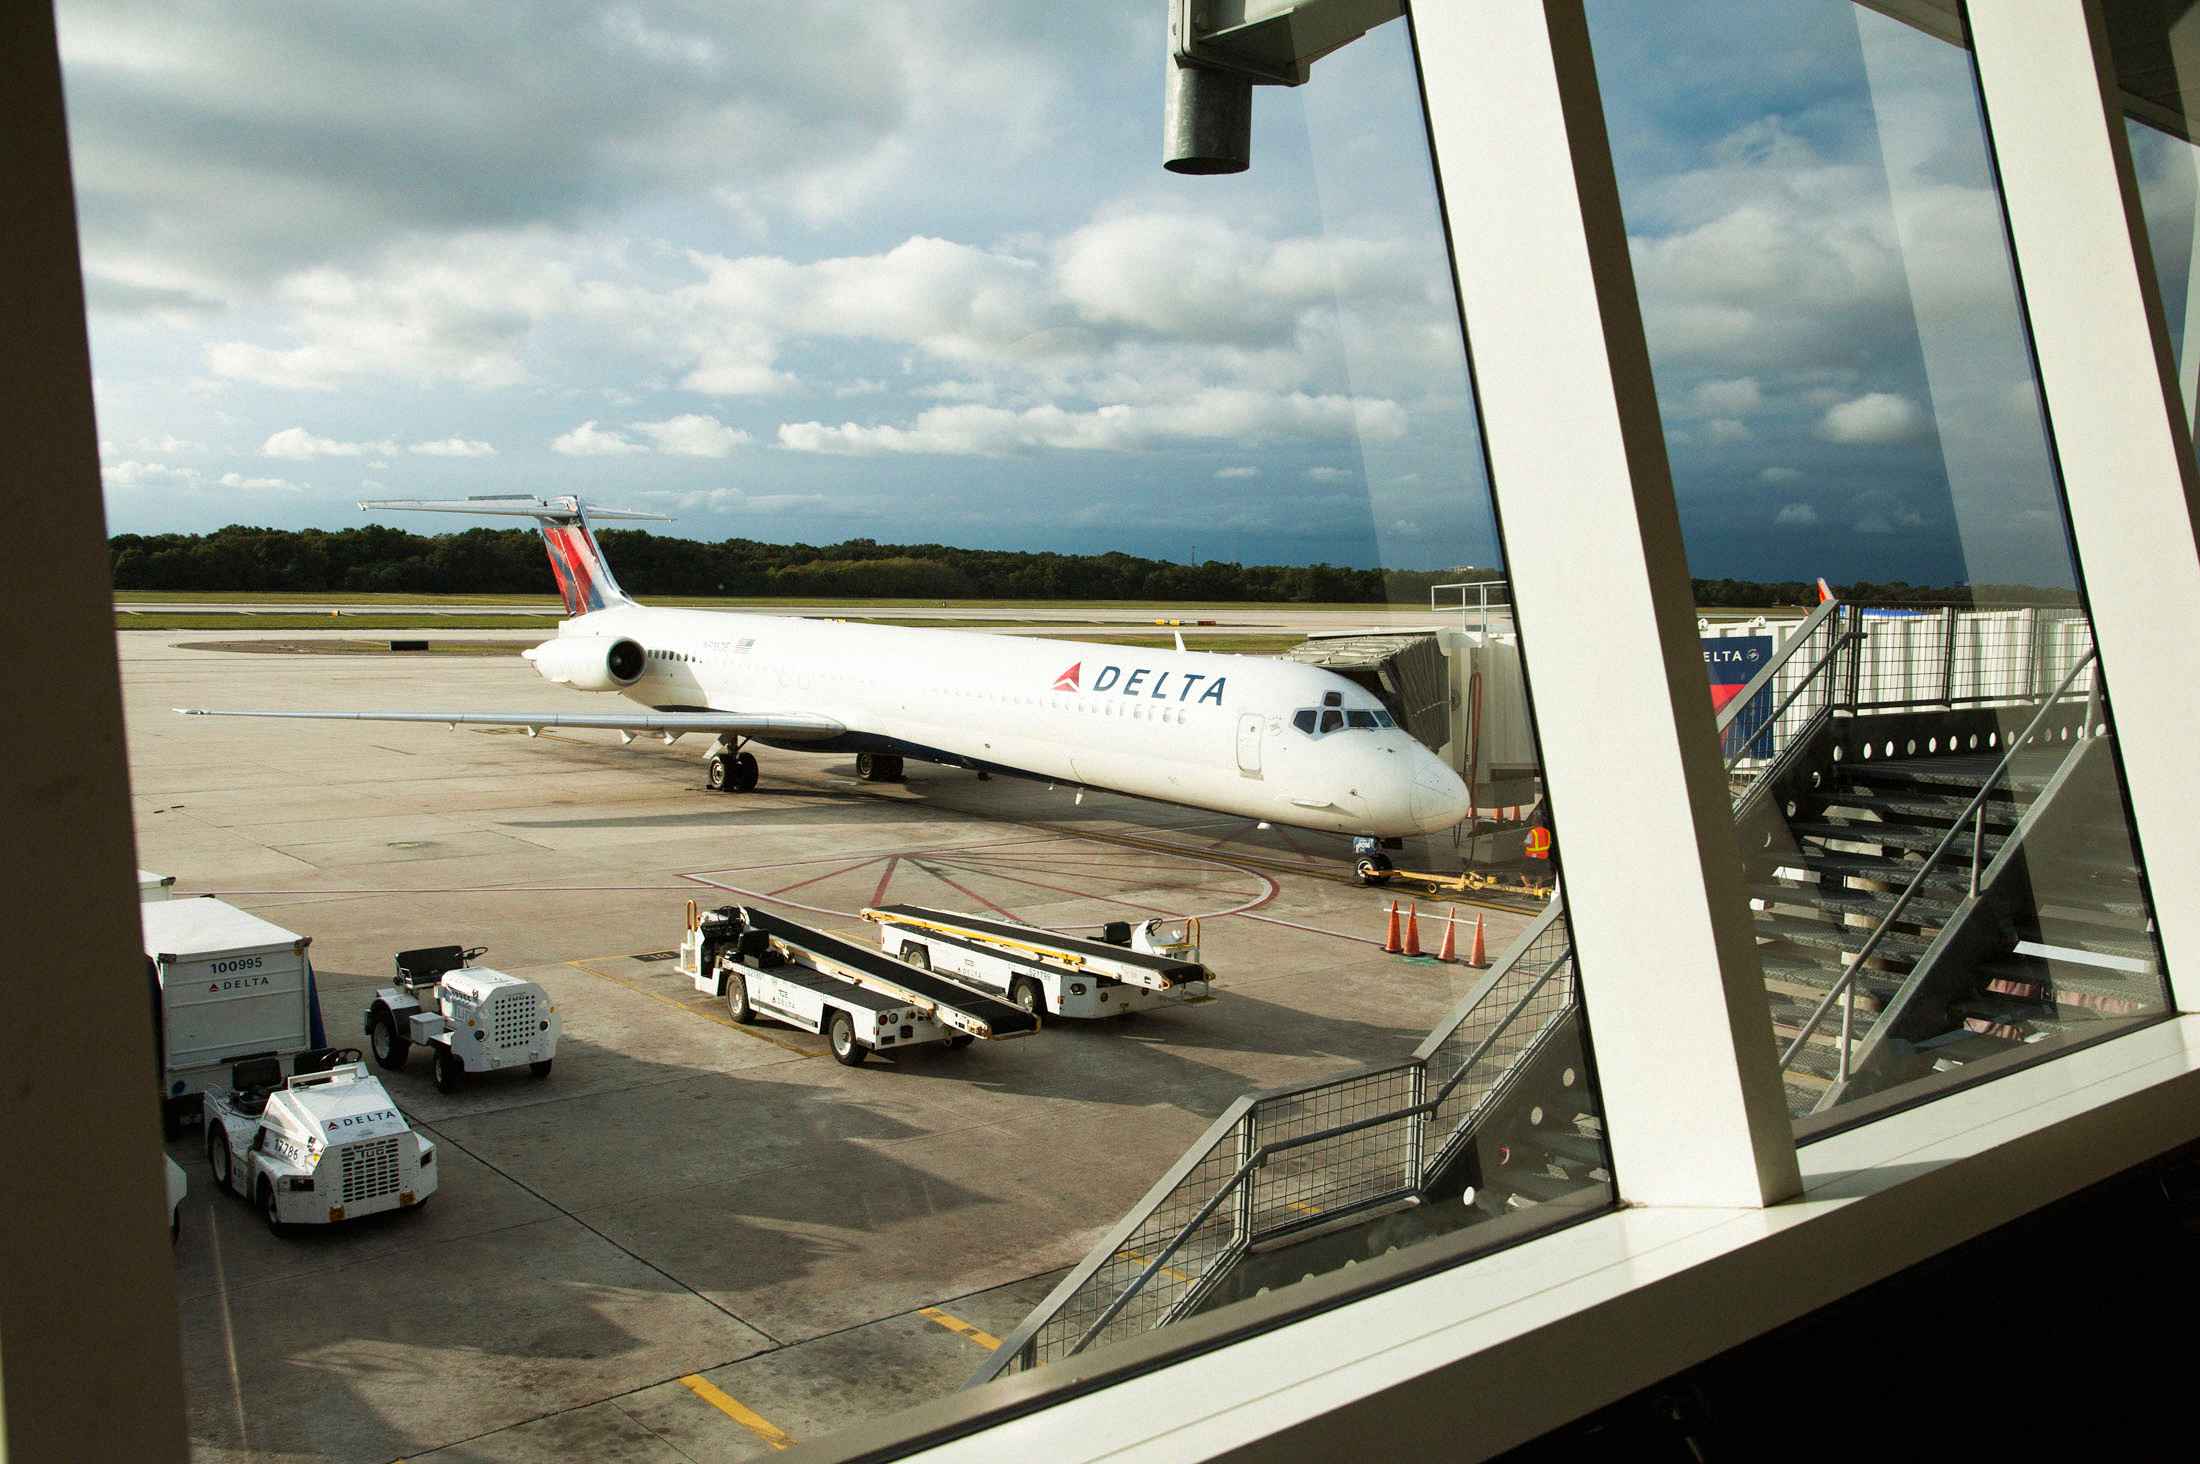 A Delta MD-88 passenger jet at Tampa International Airport.